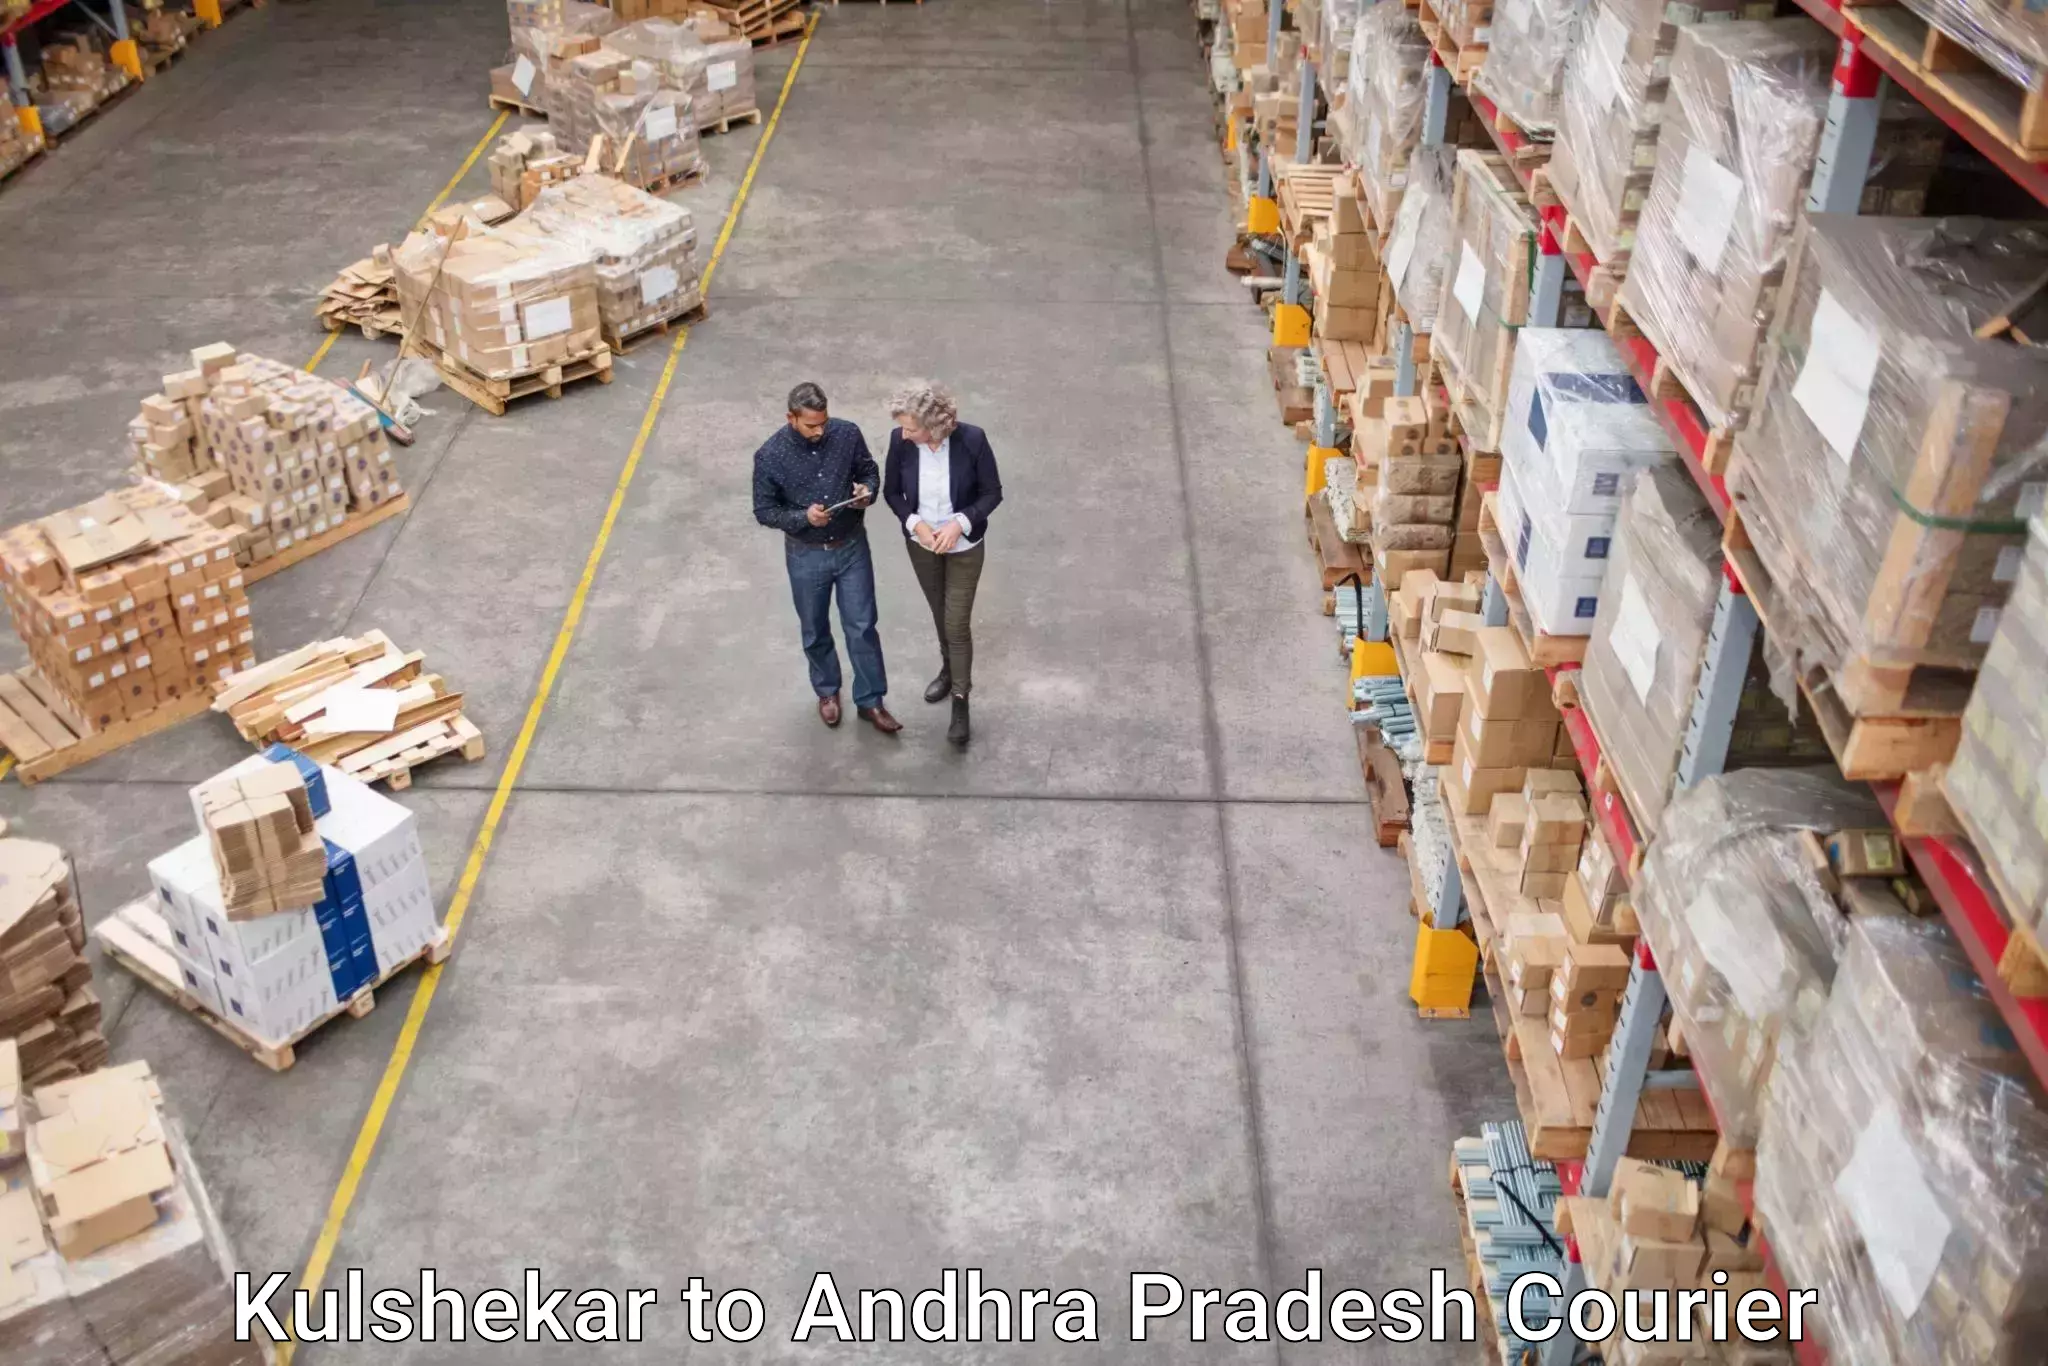 Courier service partnerships in Kulshekar to Akividu